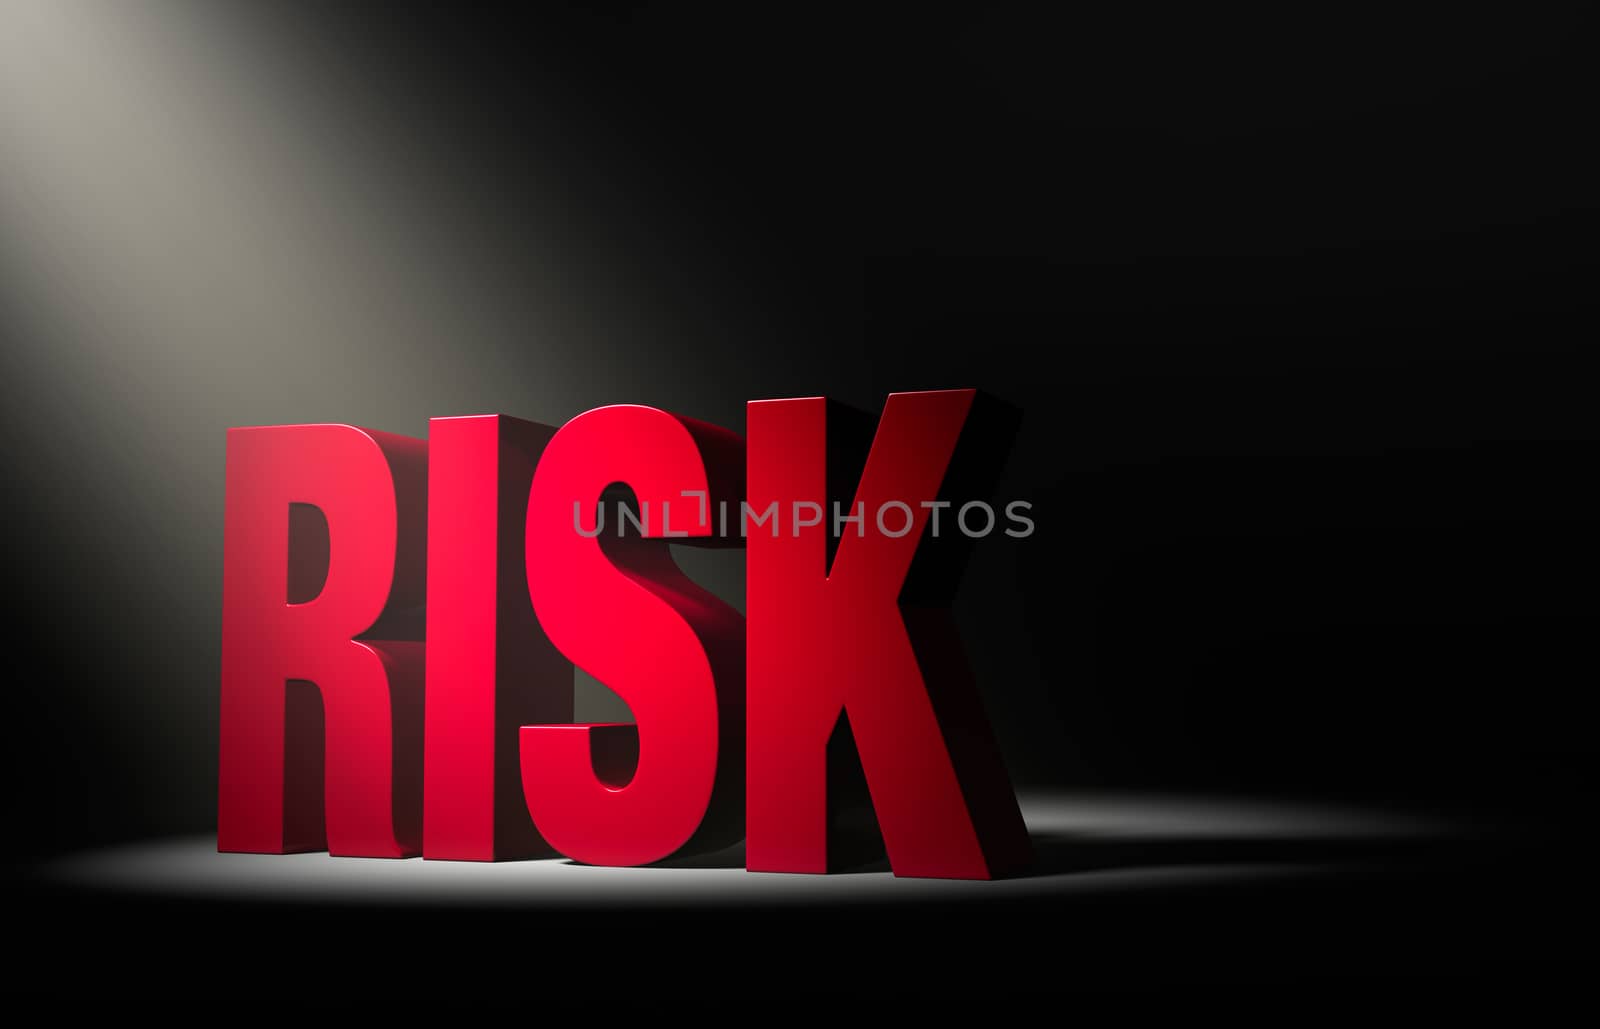 Angled spotlight revealing red "Risk" on a dark background.